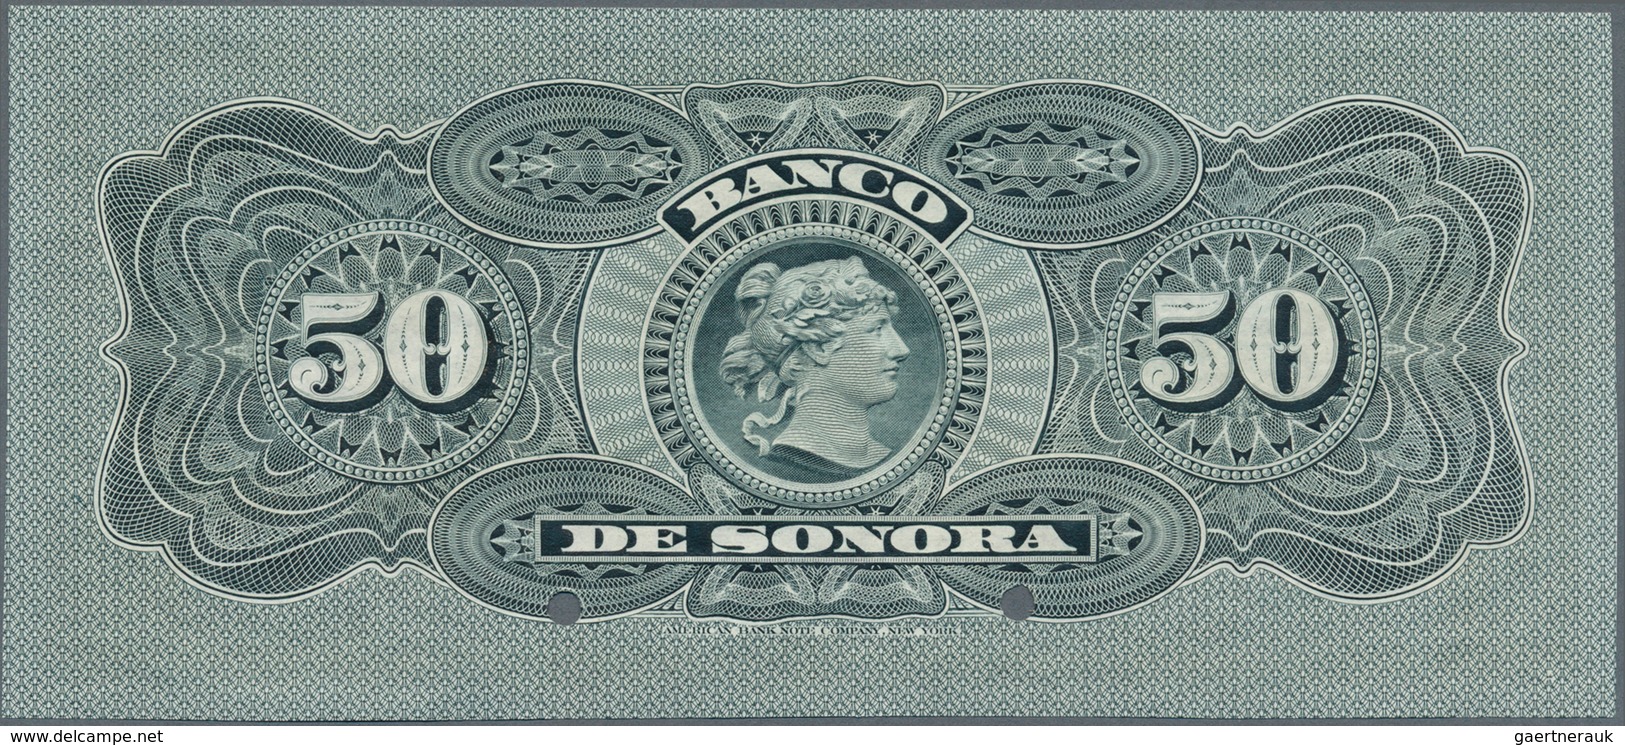 Mexico: El Banco De Sonora 50 Pesos 1899-1911 SPECIMEN, P.S422s, Punch Hole Cancellation And Red Ove - México